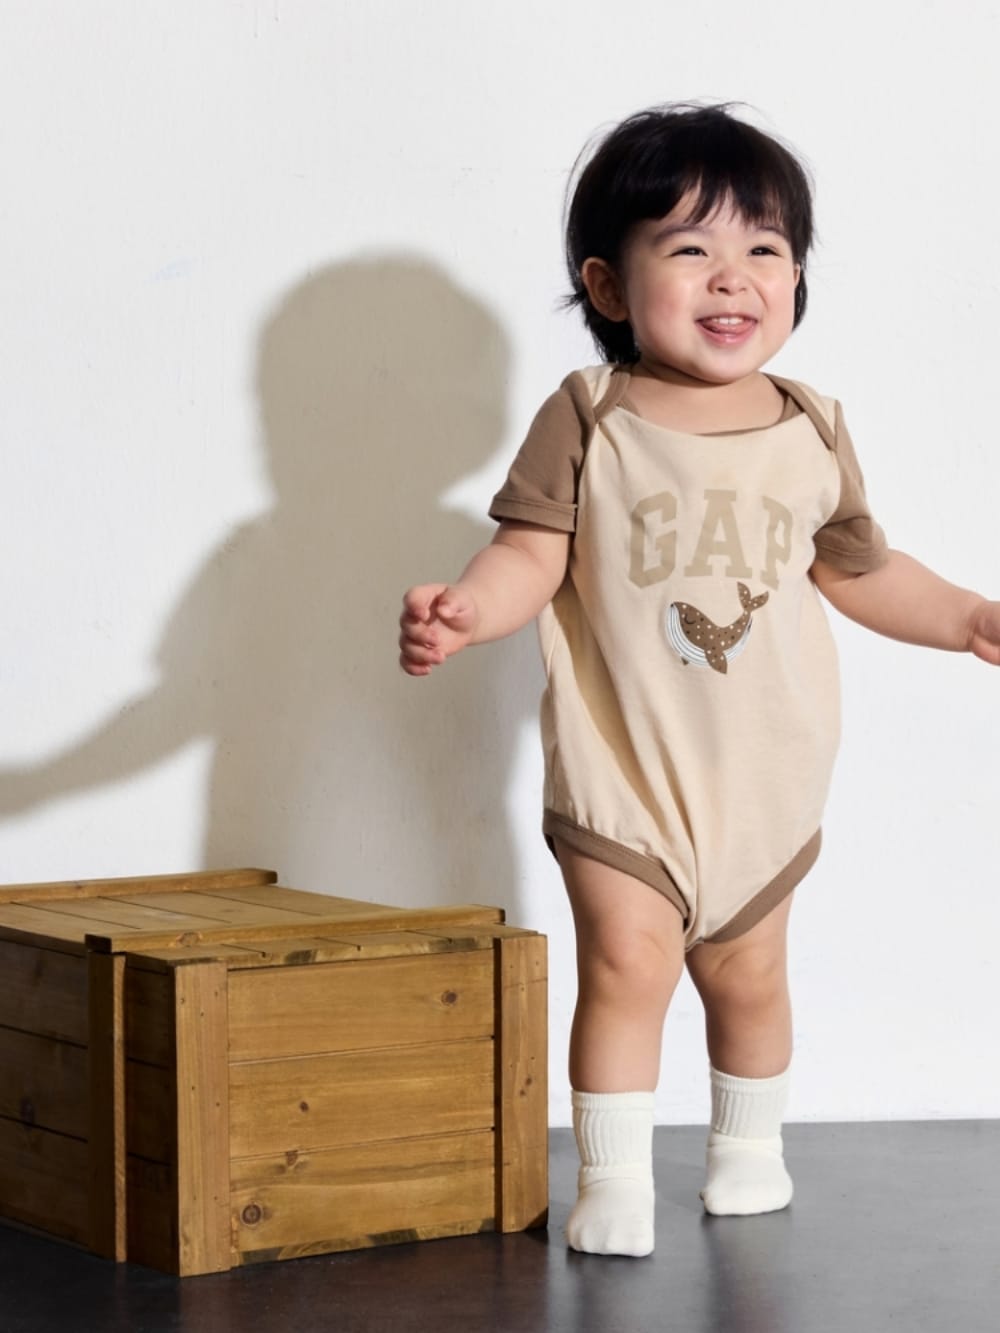 GAP 嬰兒裝 Logo純棉印花圓領短袖包屁衣-粉色(505